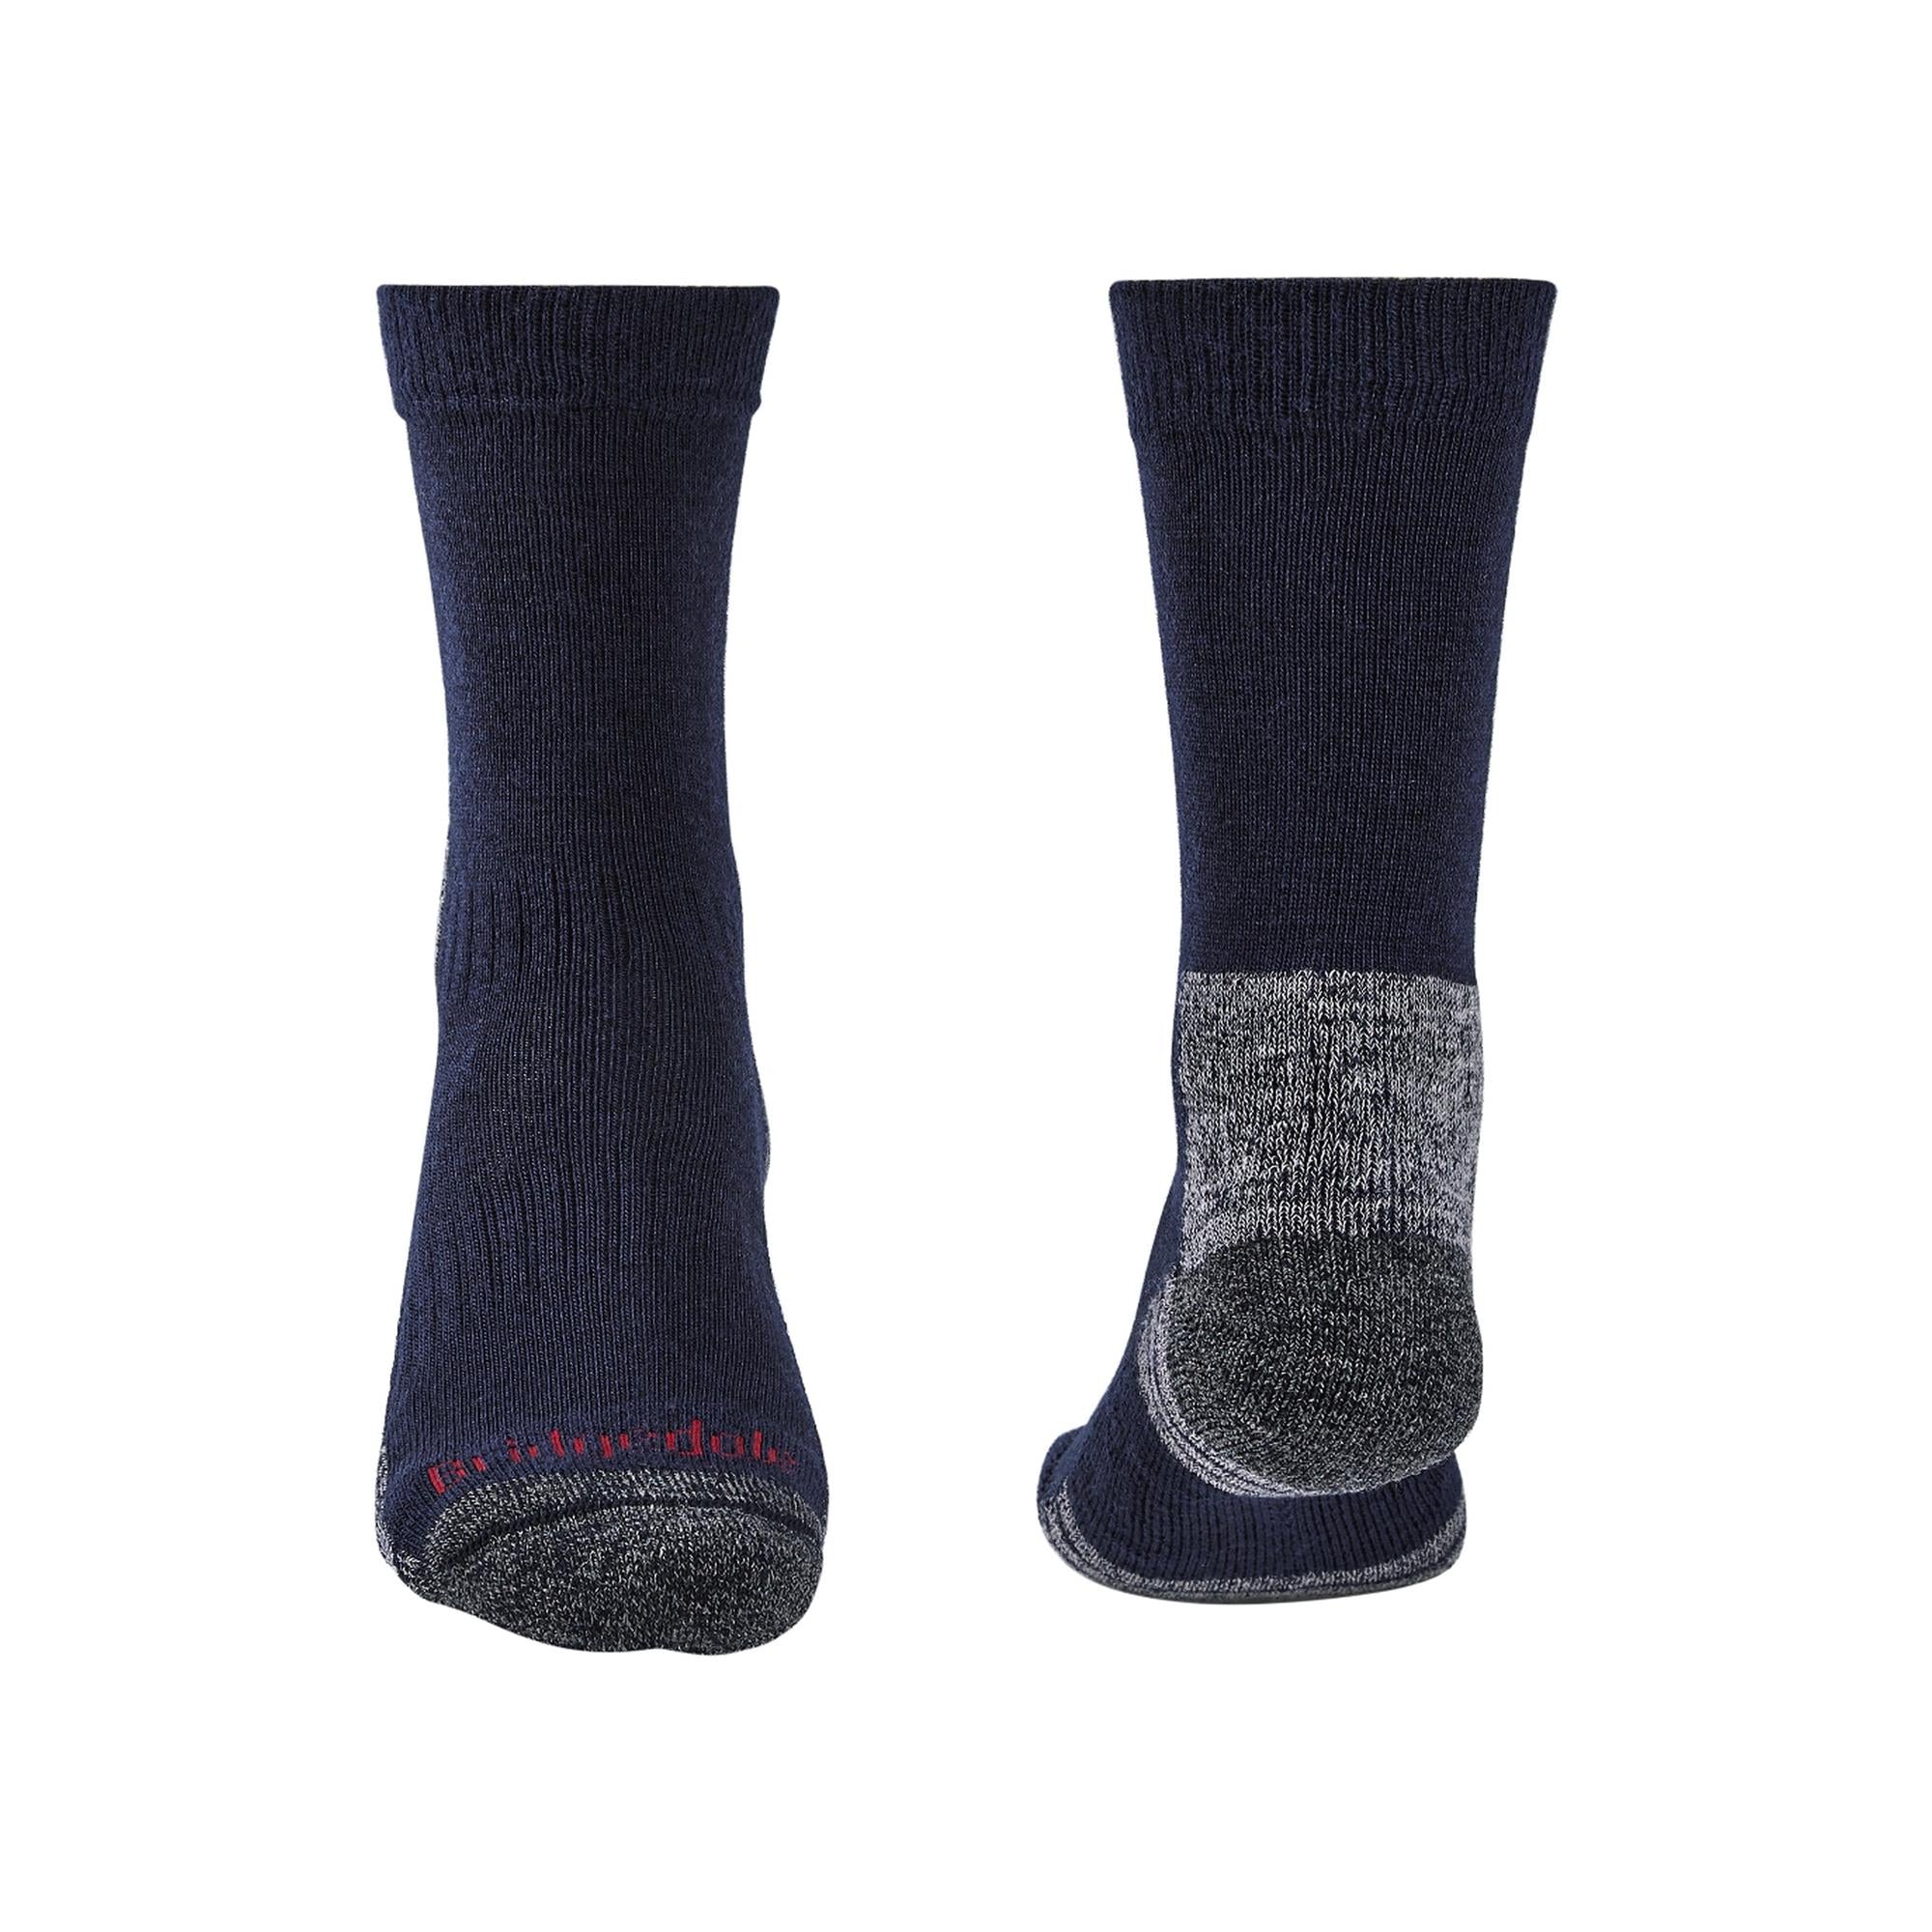 Bridgedale Men's Hike Lightweight Merino Performance Socks - Navy/Grey